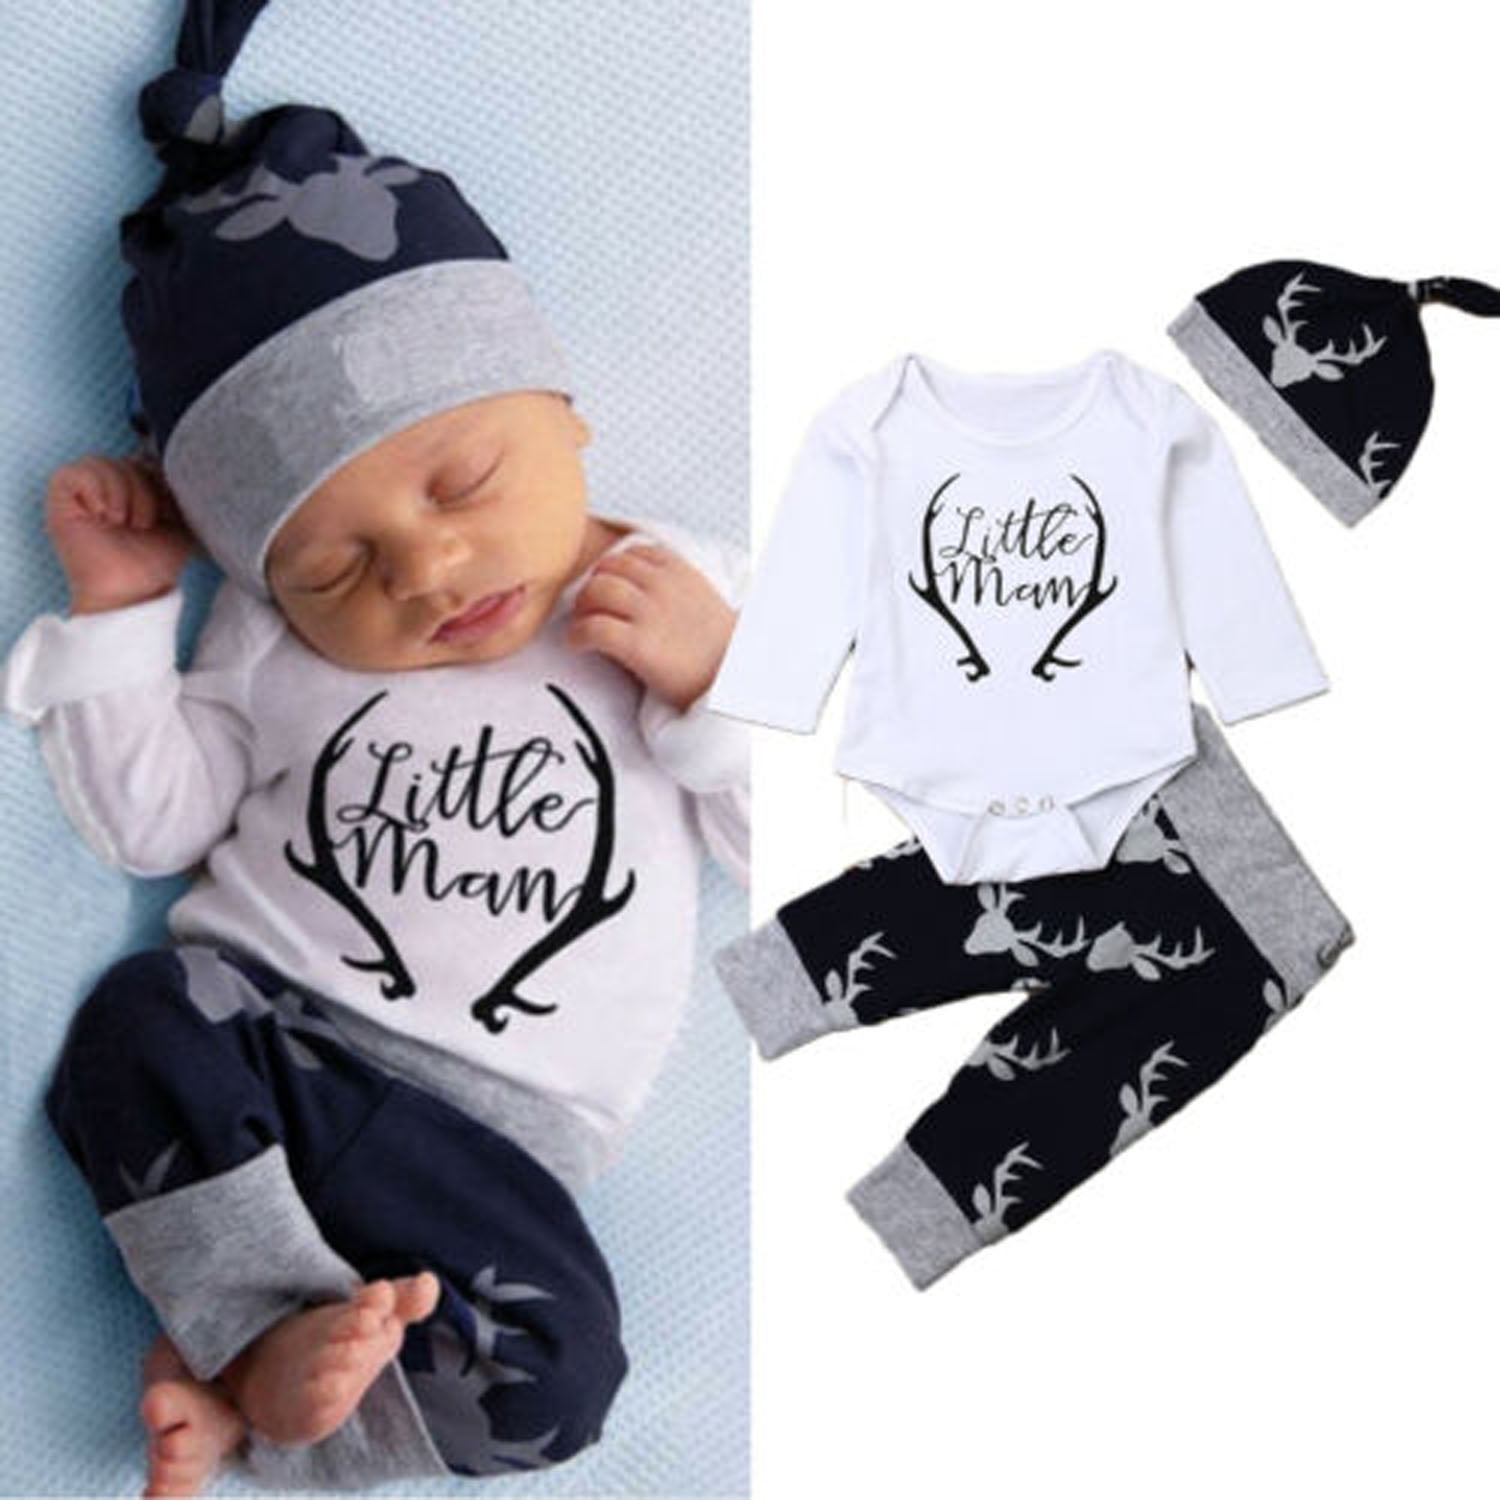 US Infant Baby Boys Cotton Printed Romper Bodysuit Jumpsuit Kids Clothes Outfit 